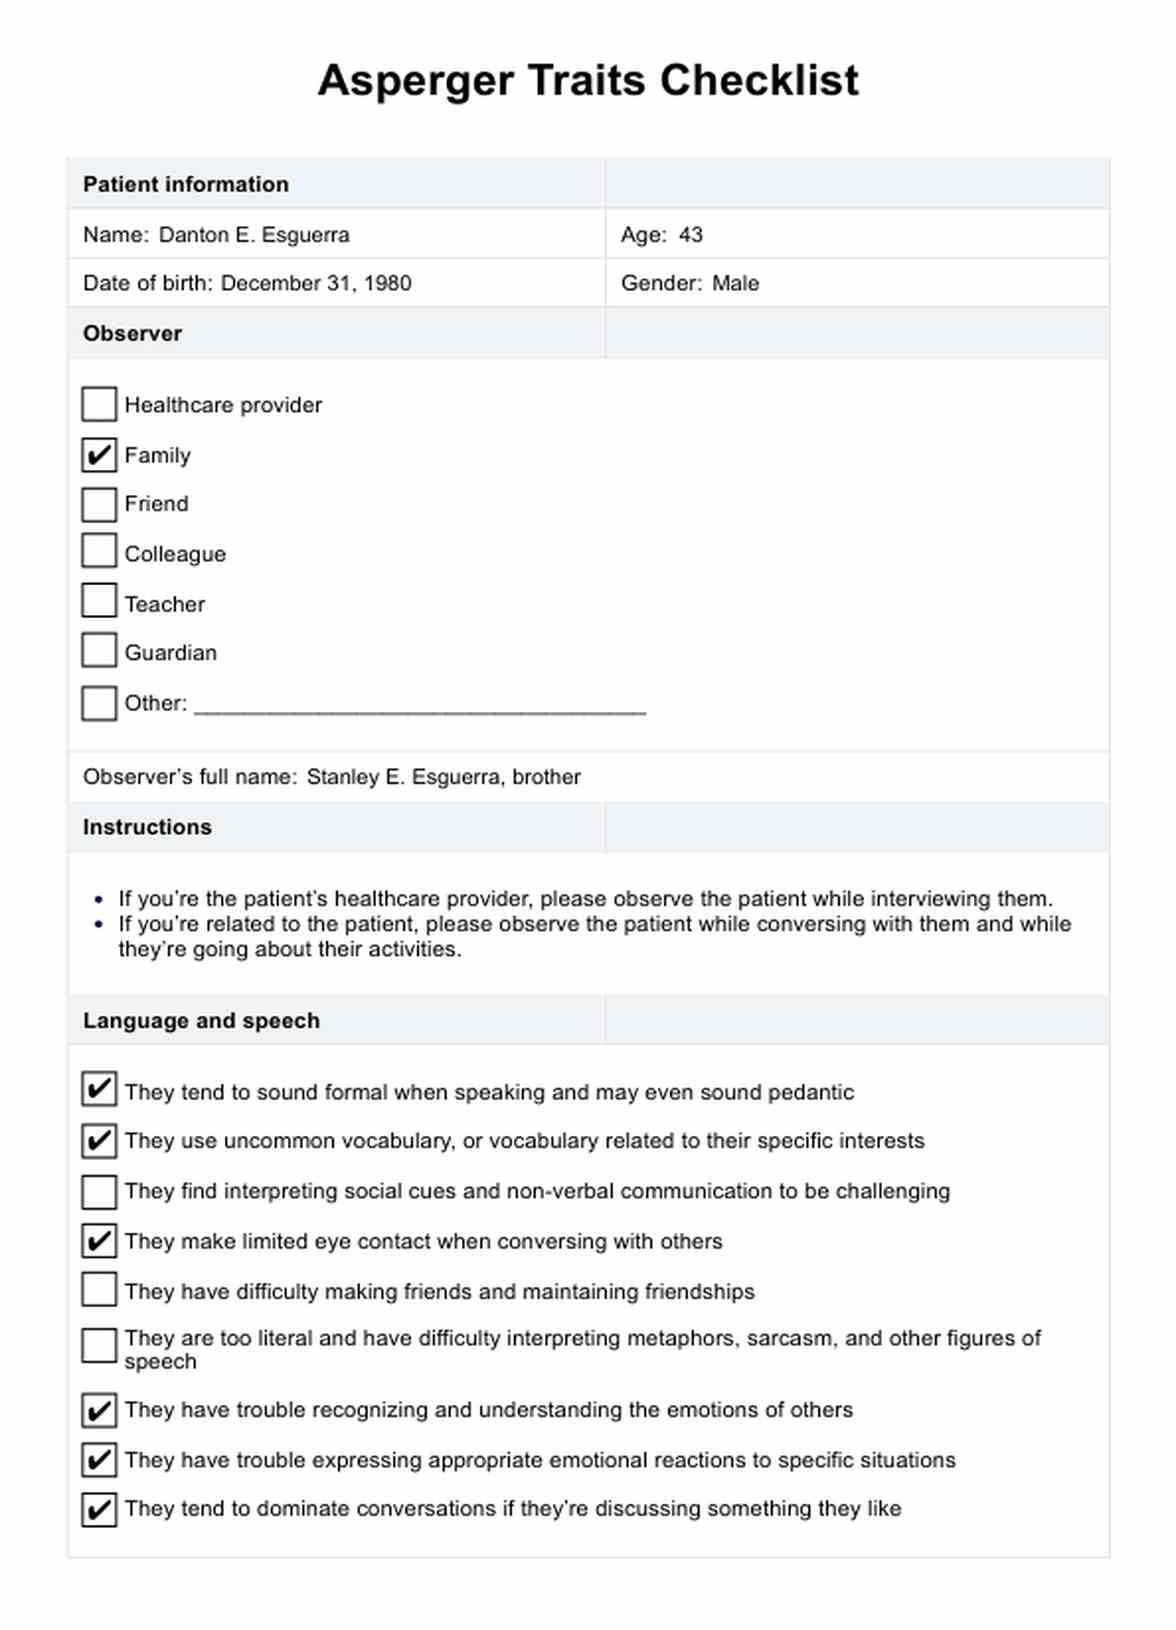 Checklist de Rasgos de Asperger PDF Example